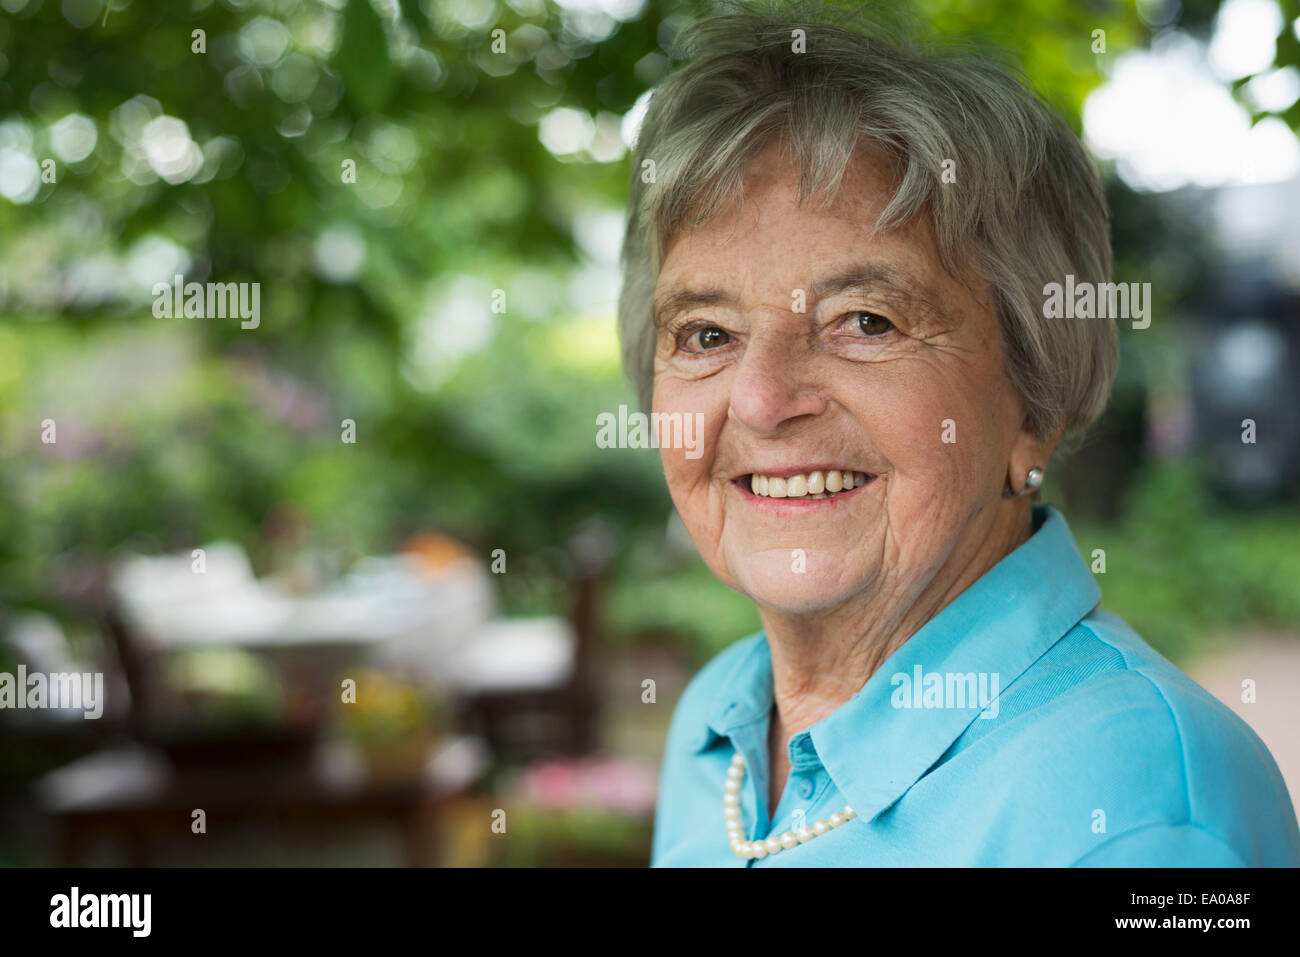 Senior woman in garden Stock Photo